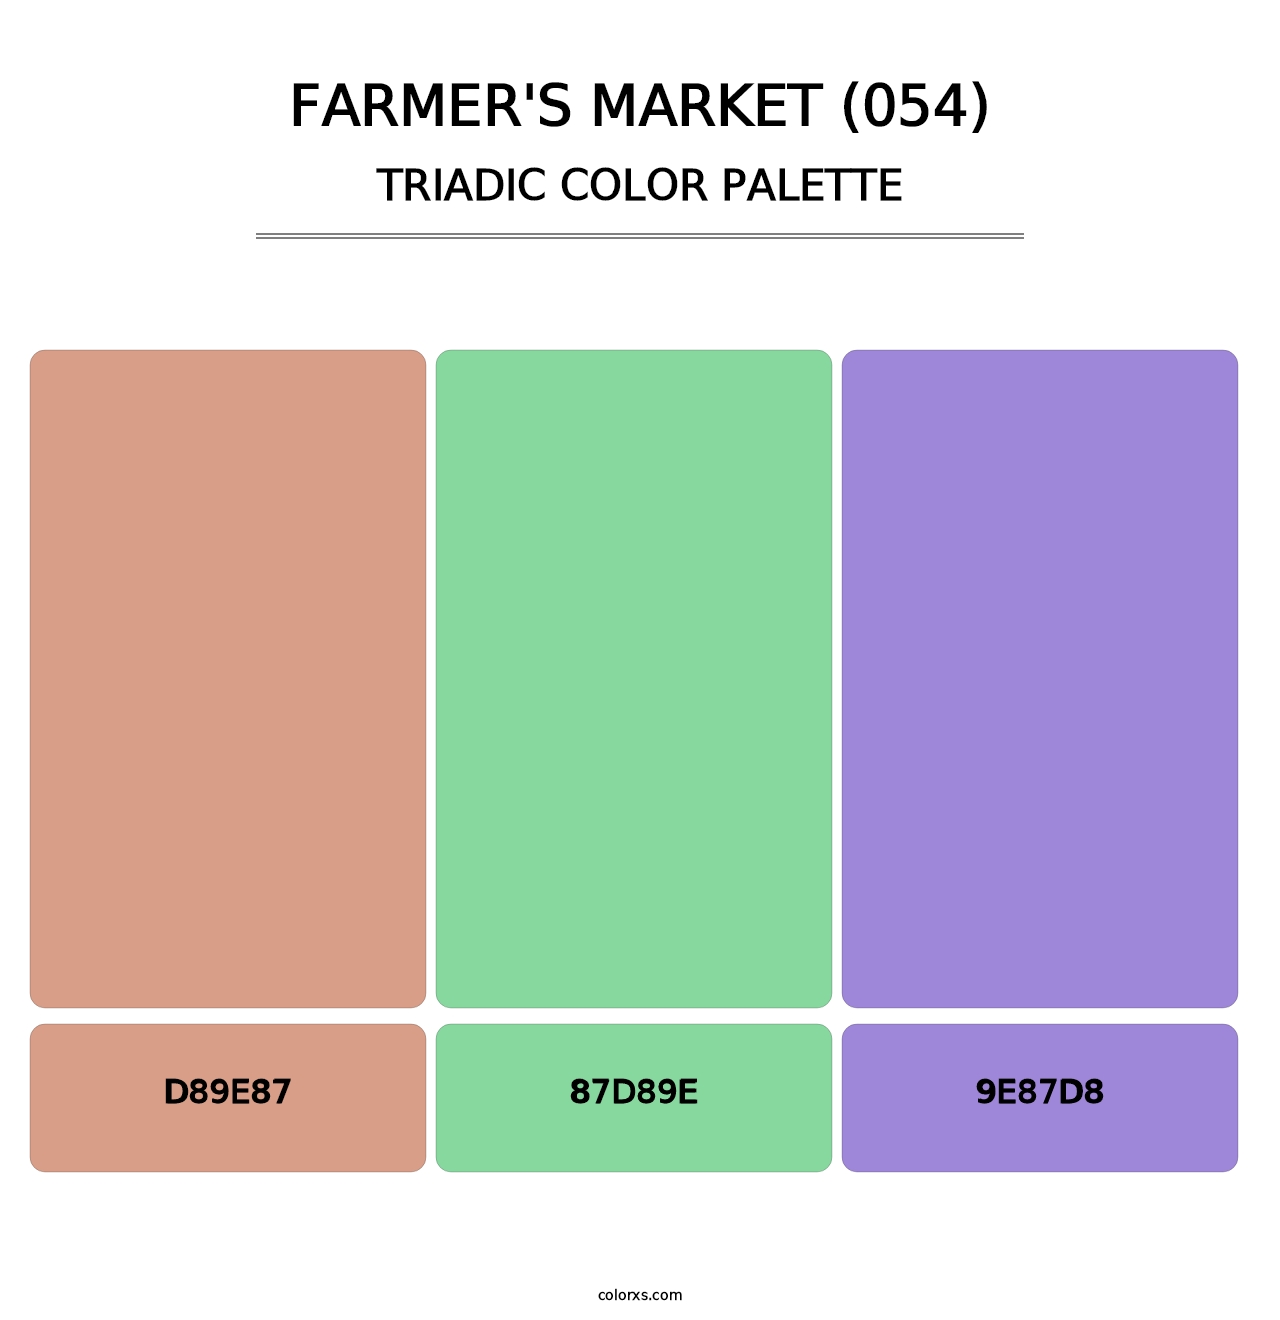 Farmer's Market (054) - Triadic Color Palette